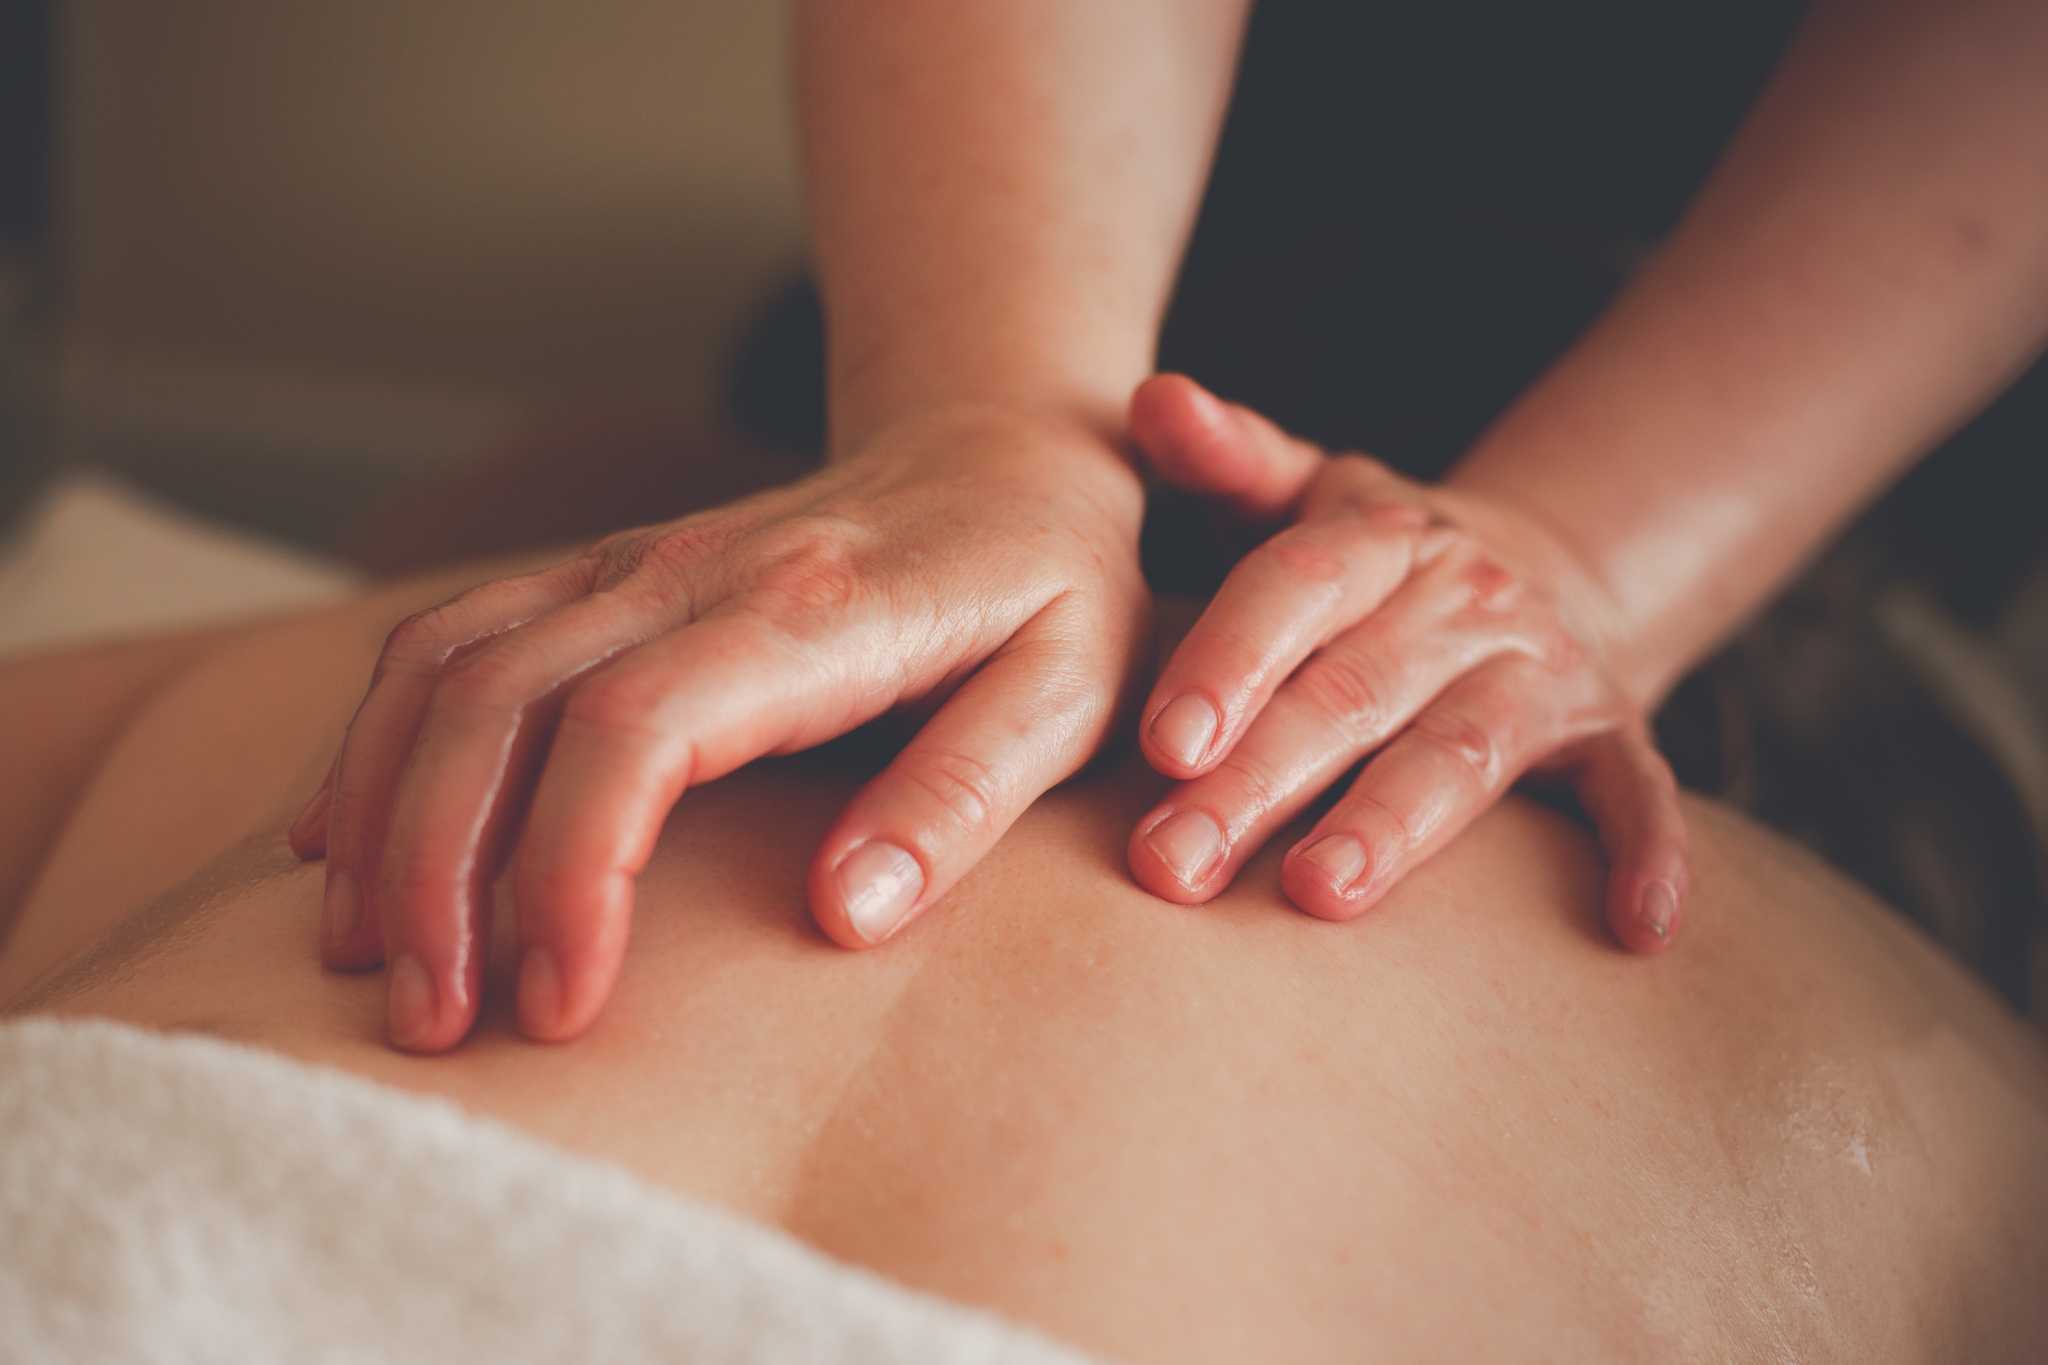 Deep Tissue or Soft Flowing Massage Techniques